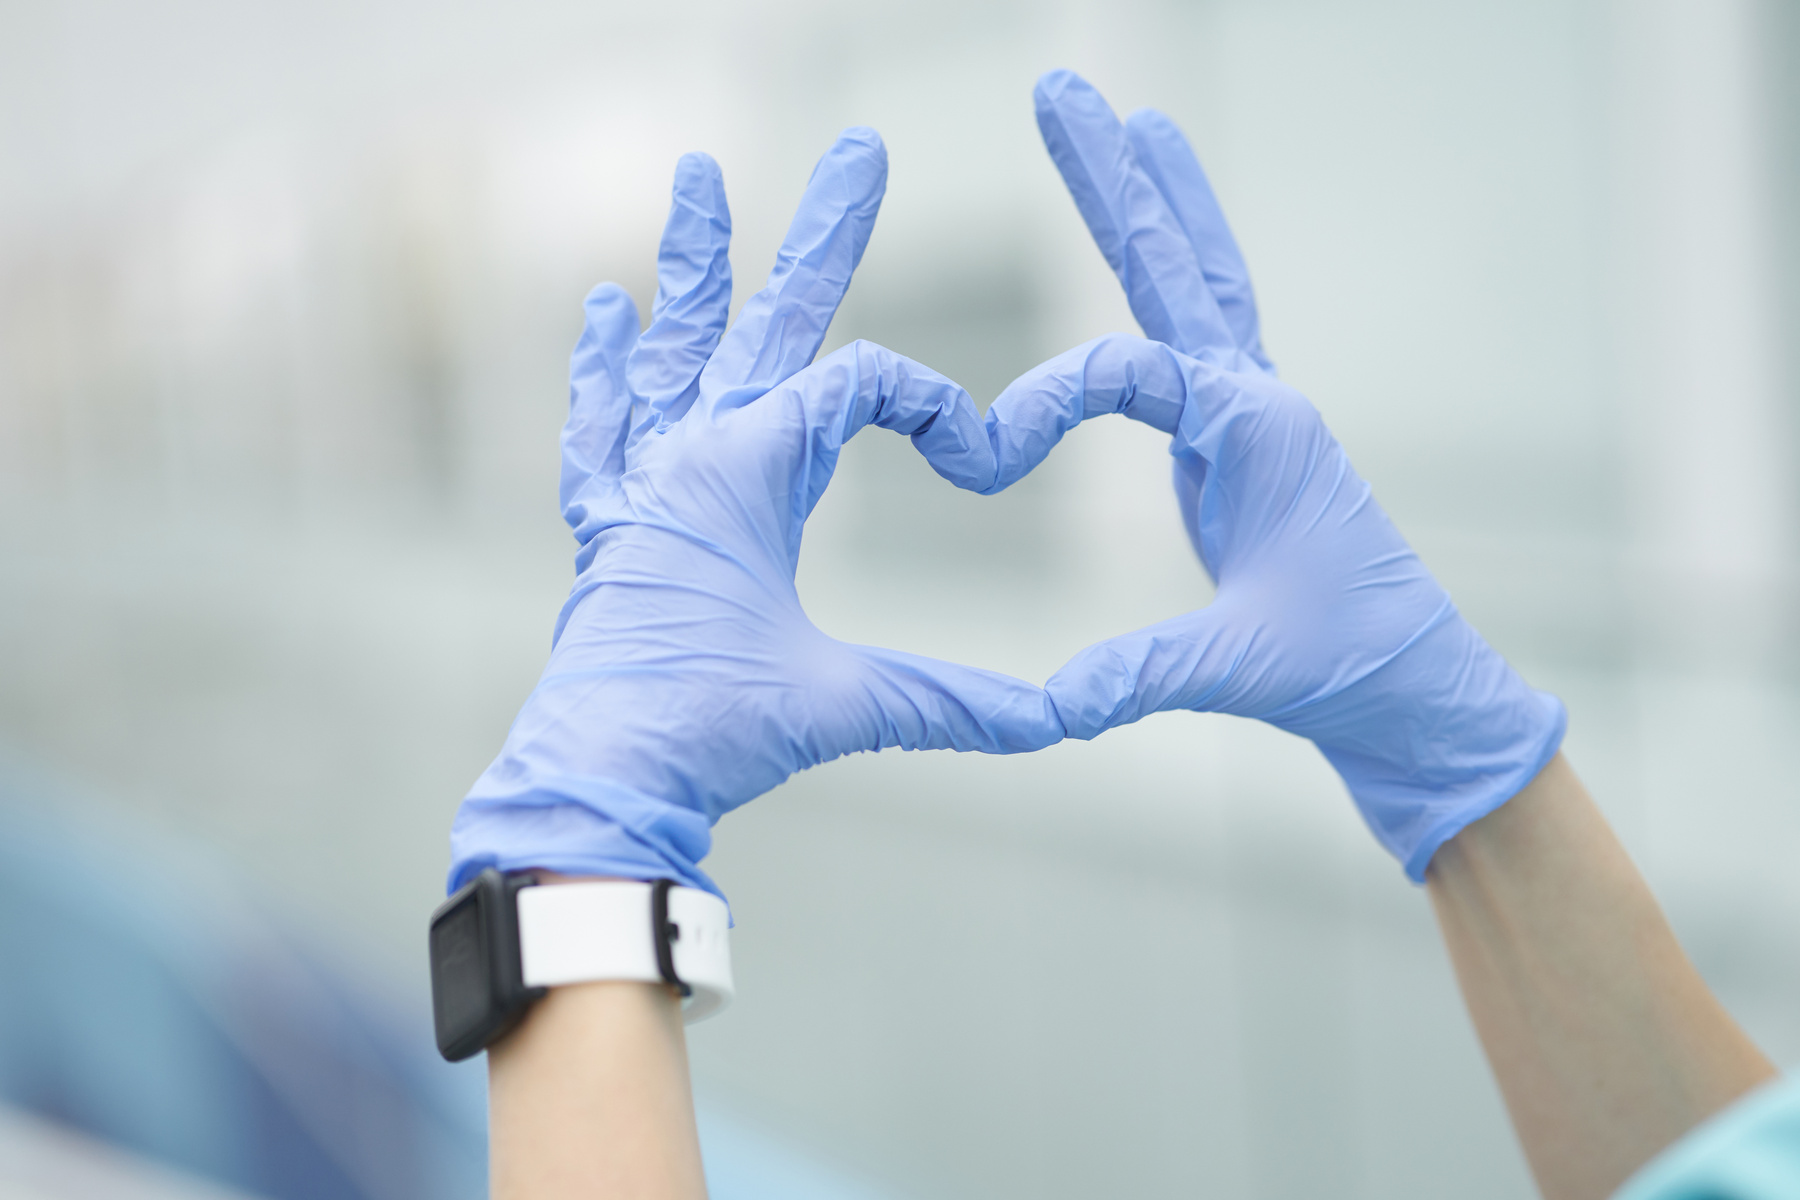 Heart sign made by medicine gloves covered hands. Love medicine concept